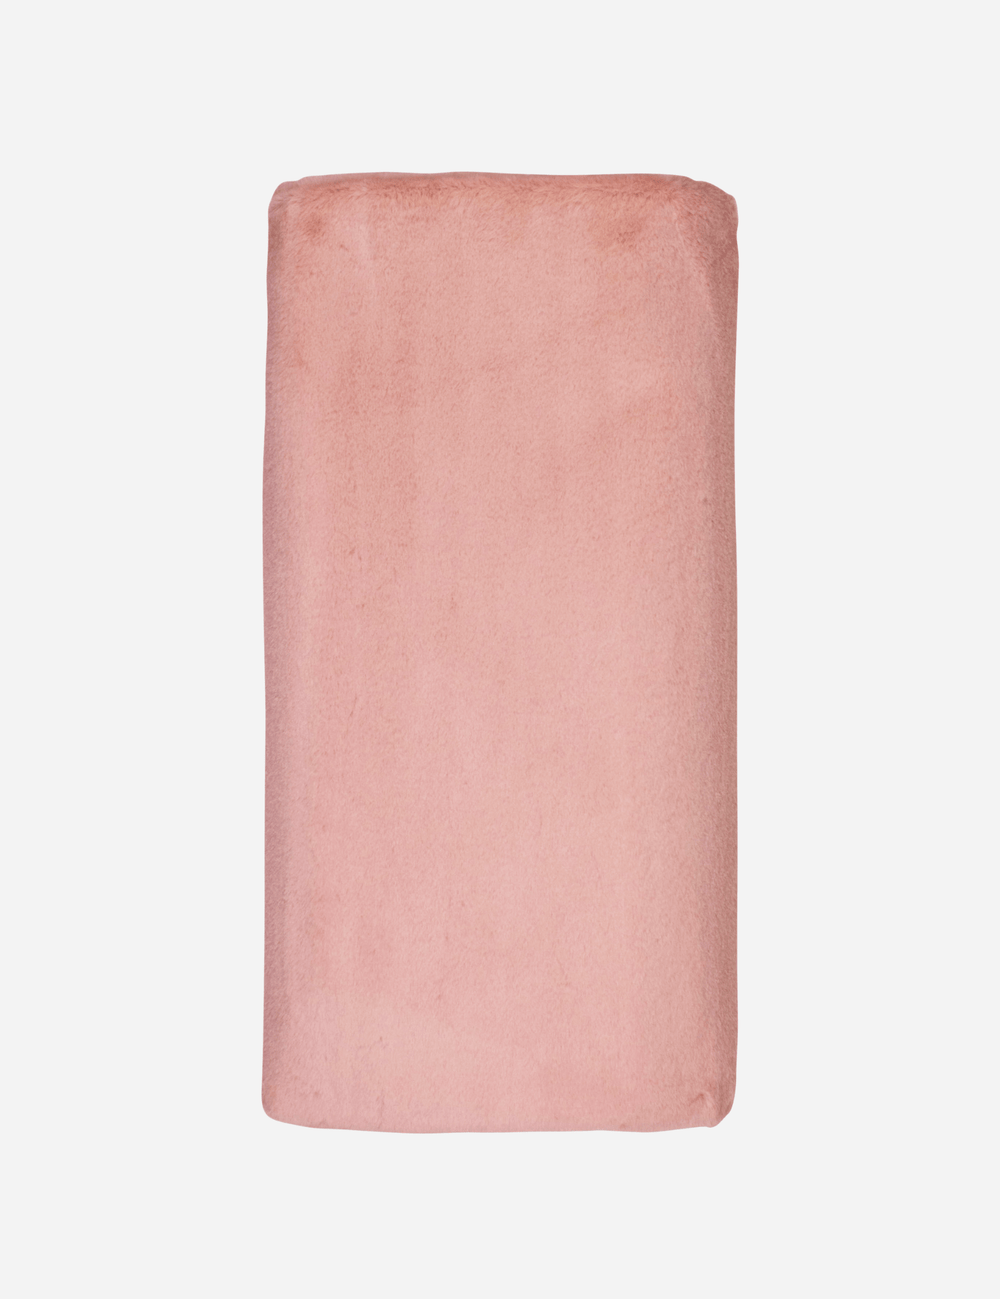 Fur Blanket - Pink